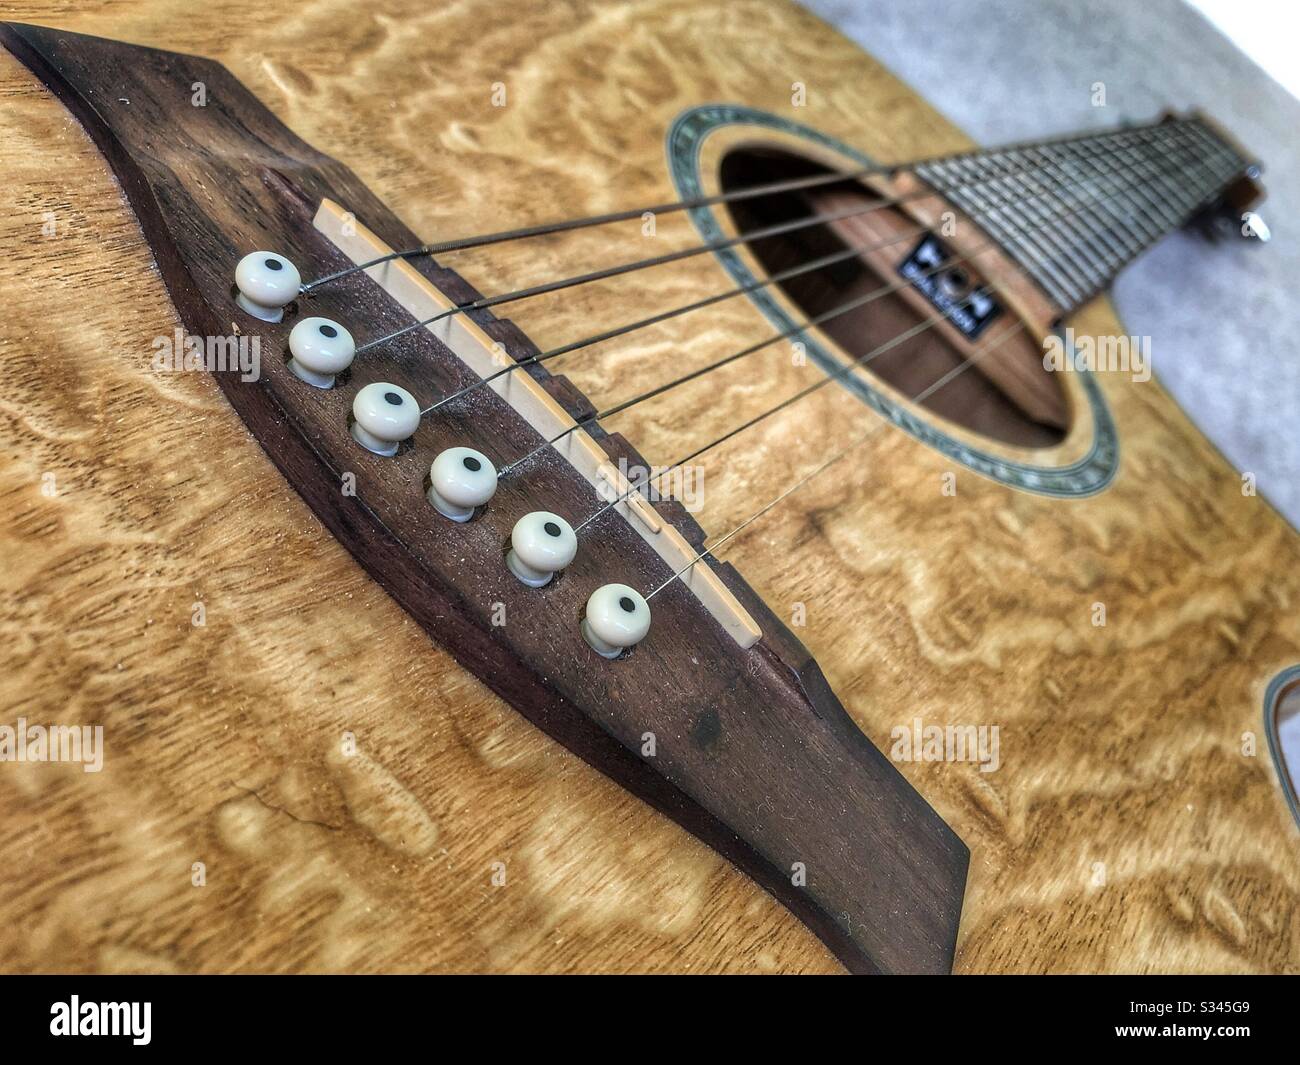 Ibanez Acoustic Guitar Stock Photo